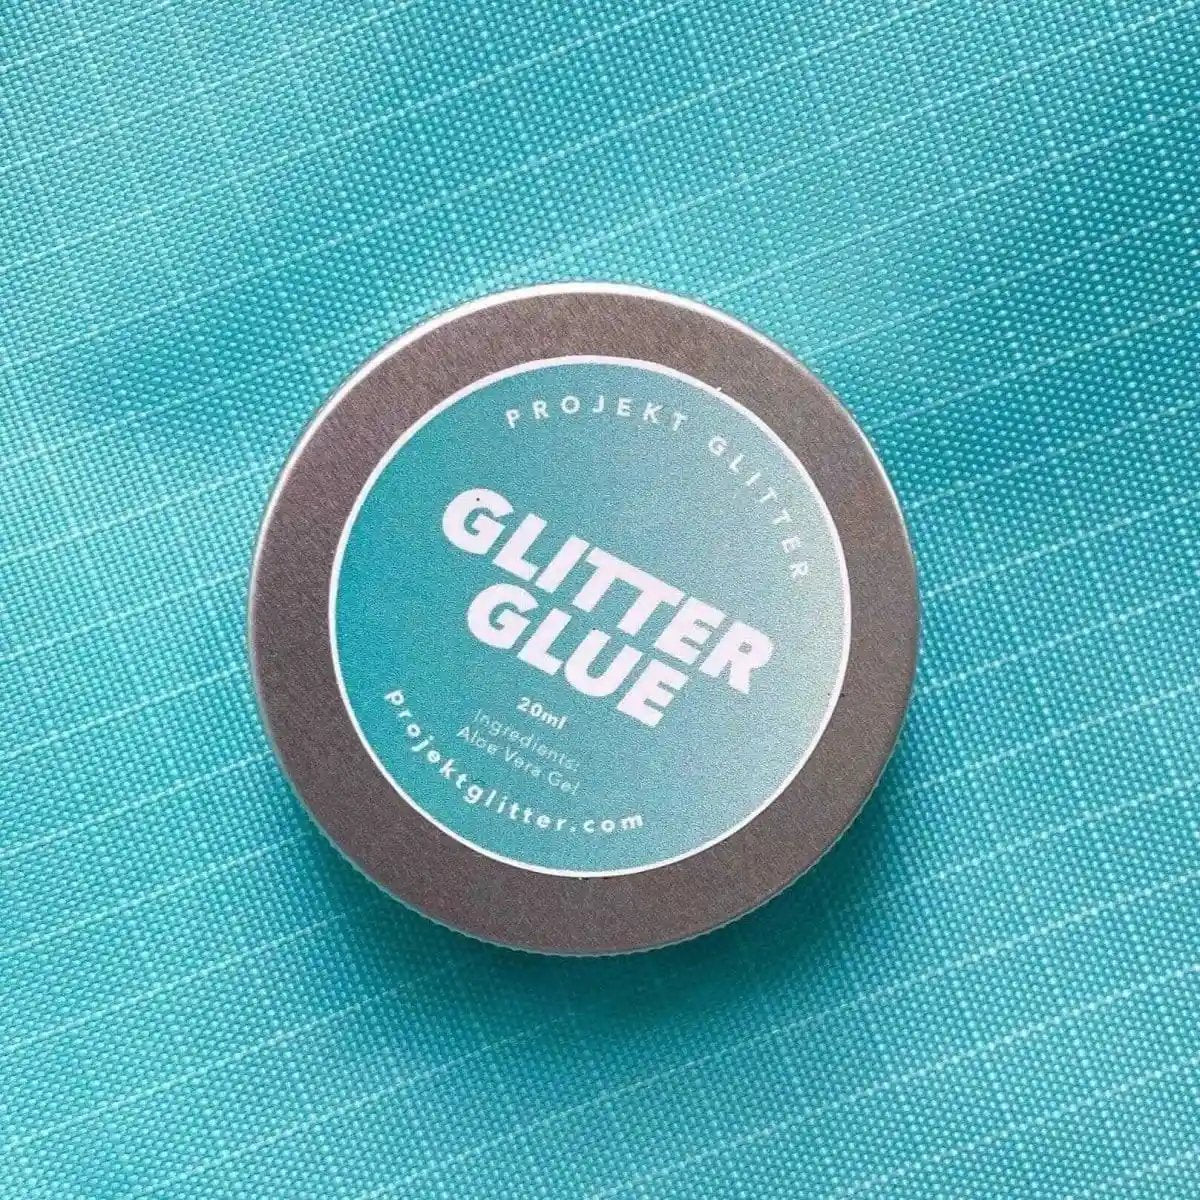 Aloe You Vera Much: Glitter Glue - Projekt Glitter